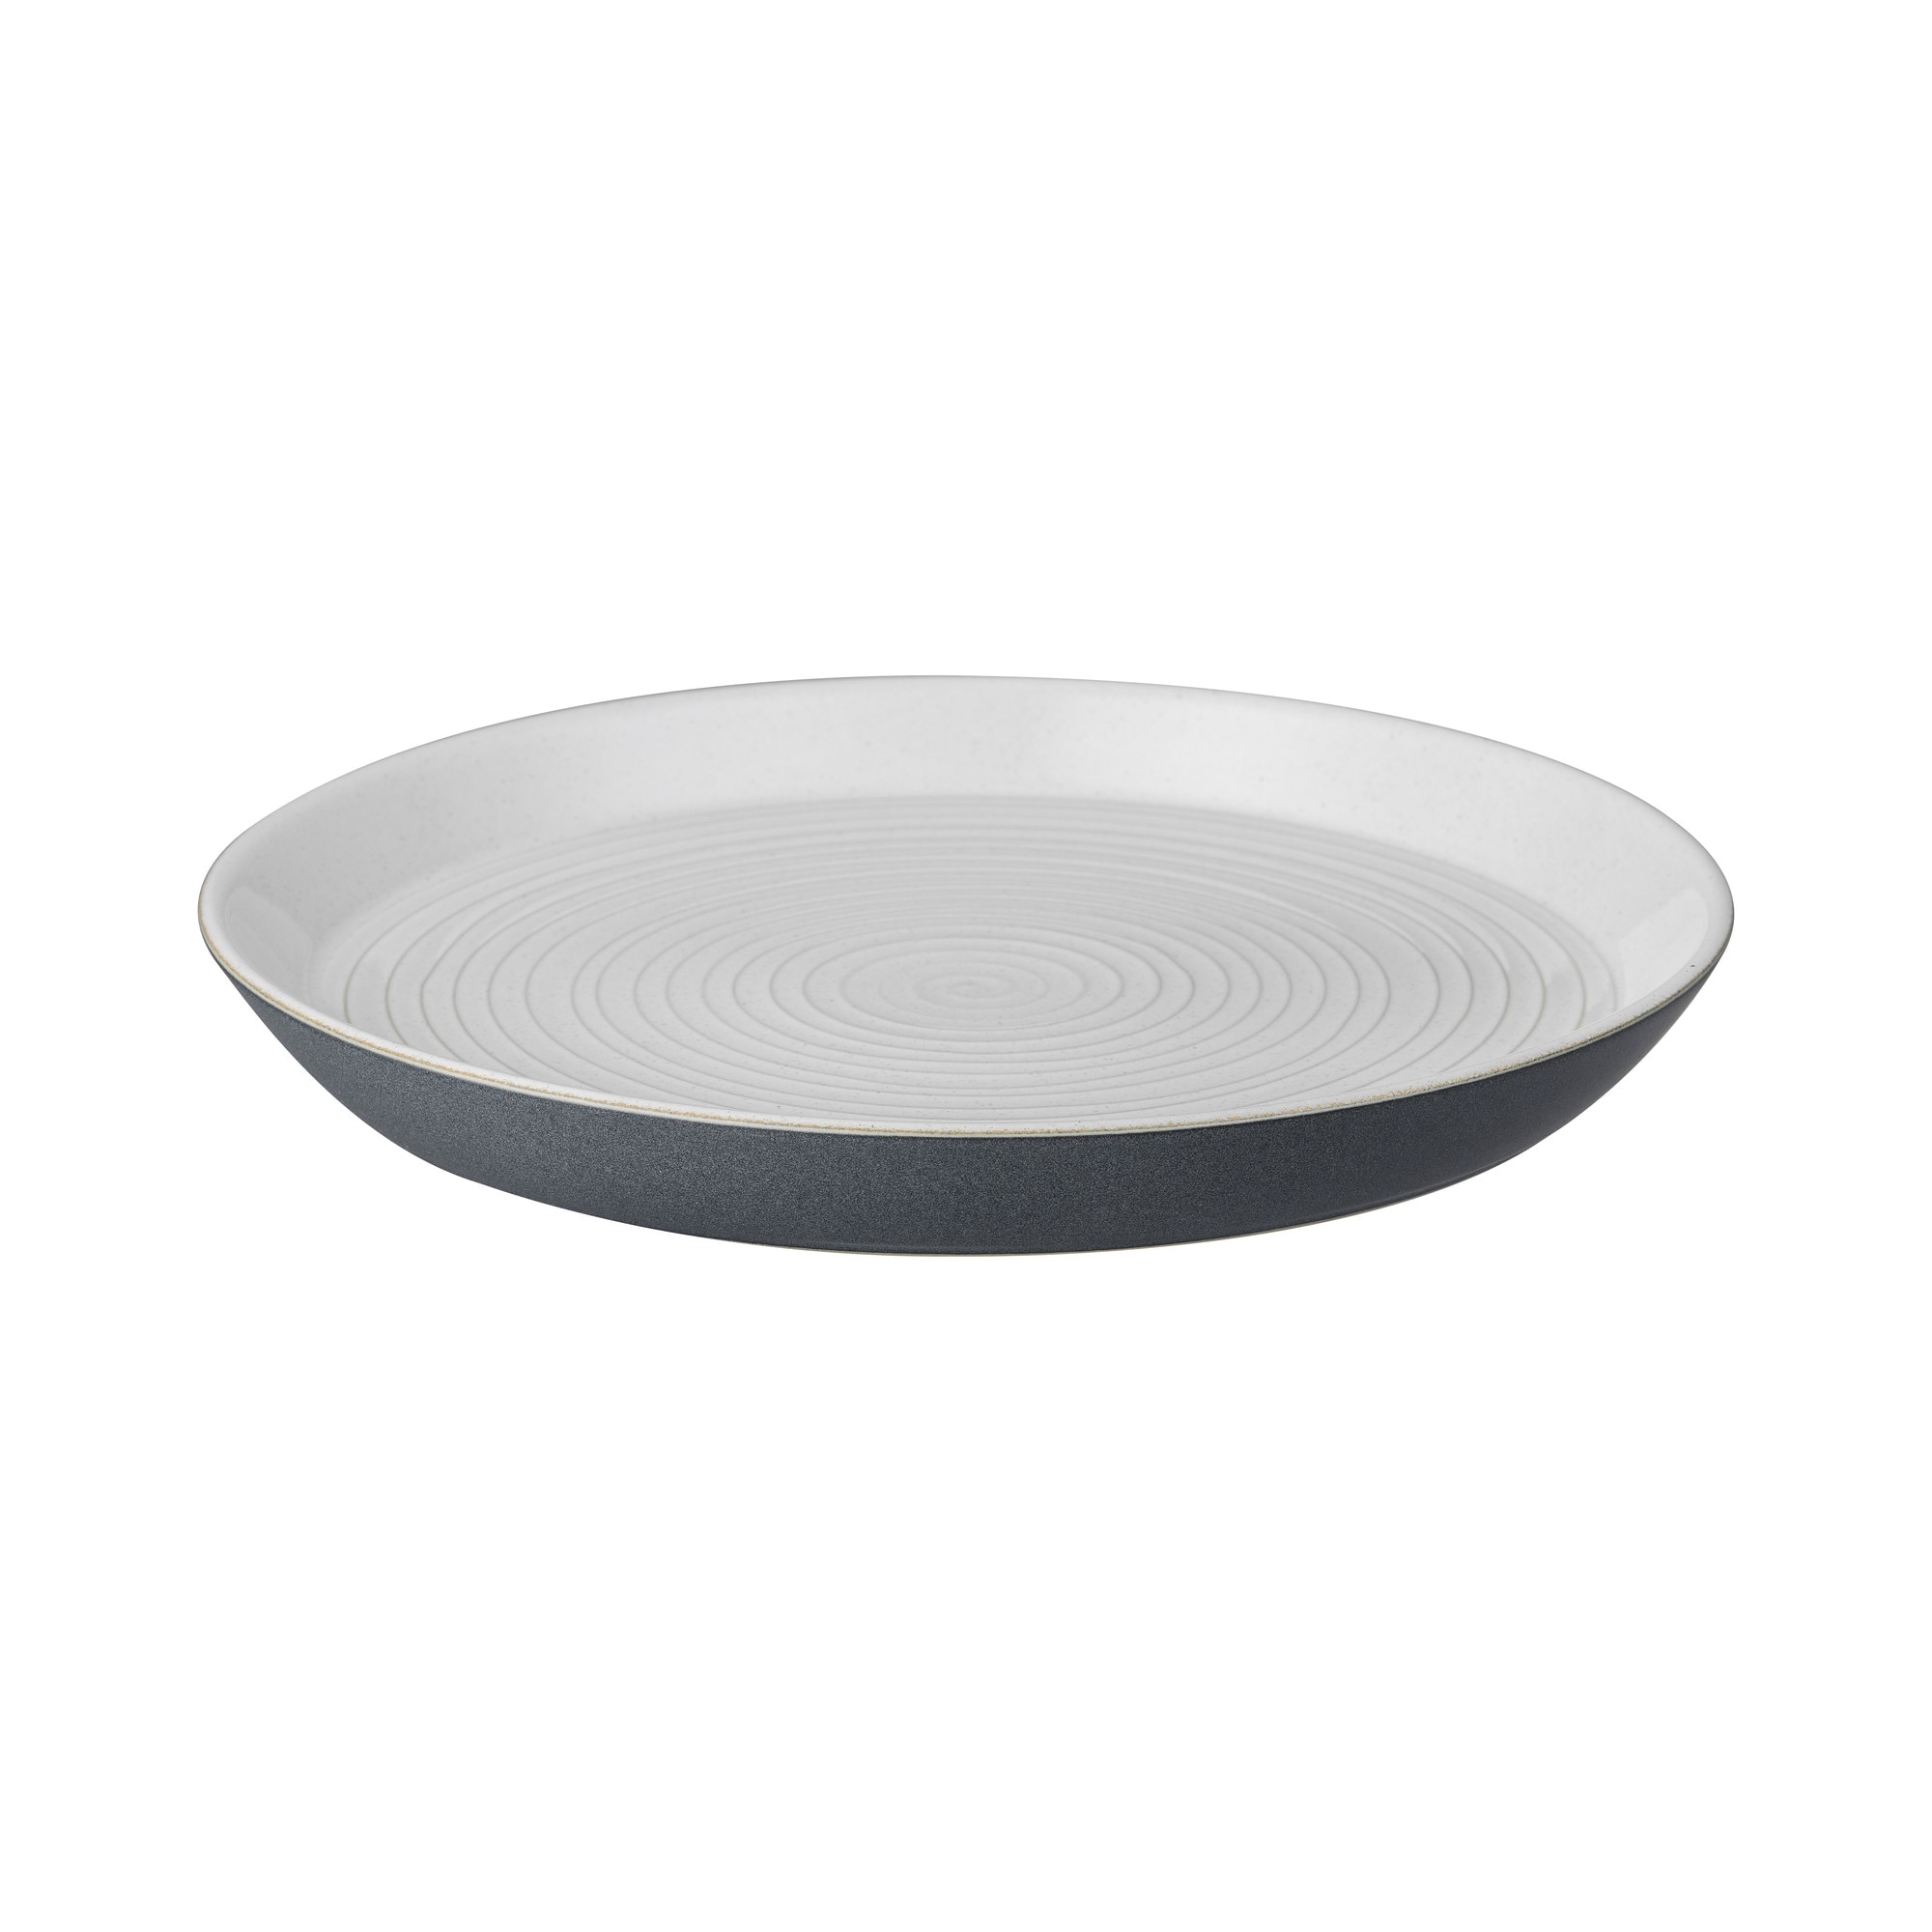 Impression Charcoal Spiral Dinner Plate